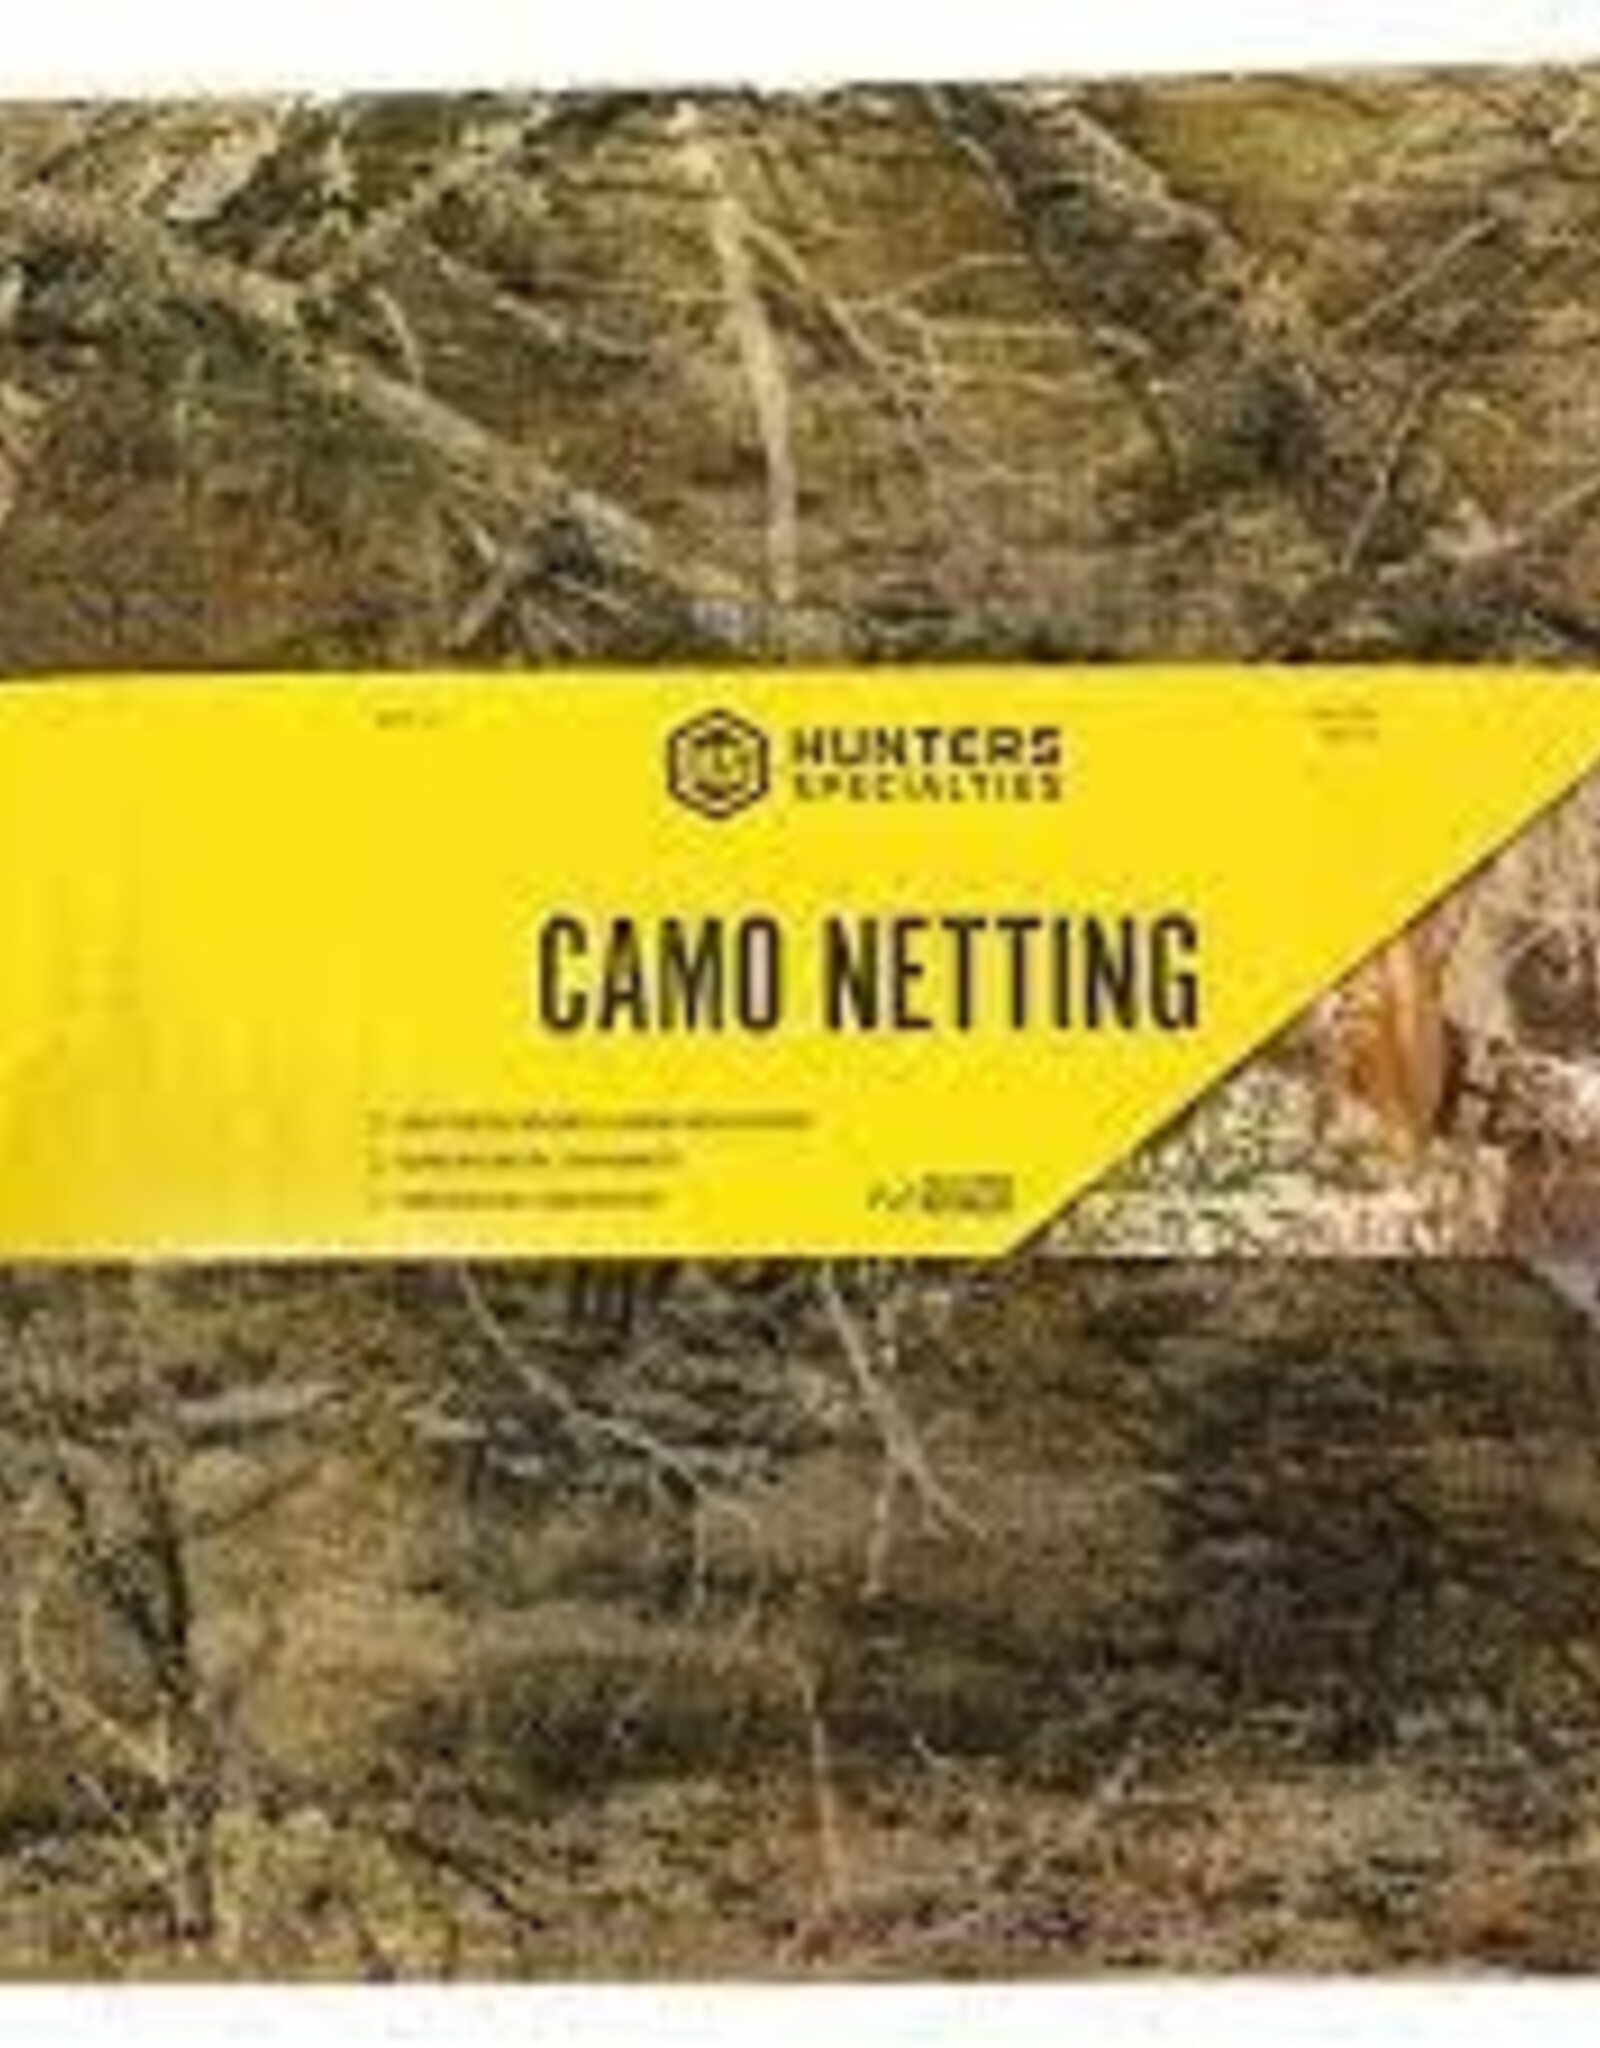 Hunters Specialties Camo Netting